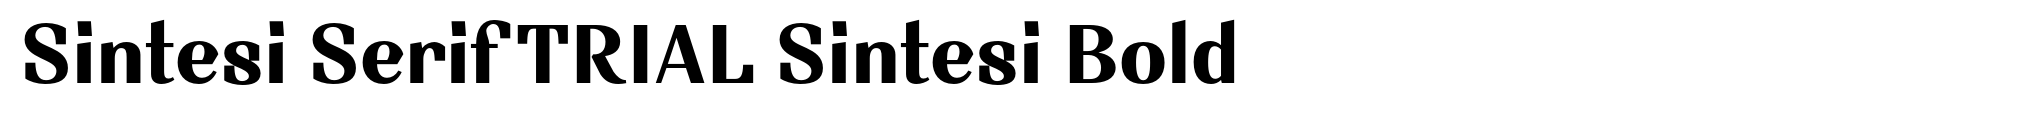 Sintesi Serif TRIAL Sintesi Bold image